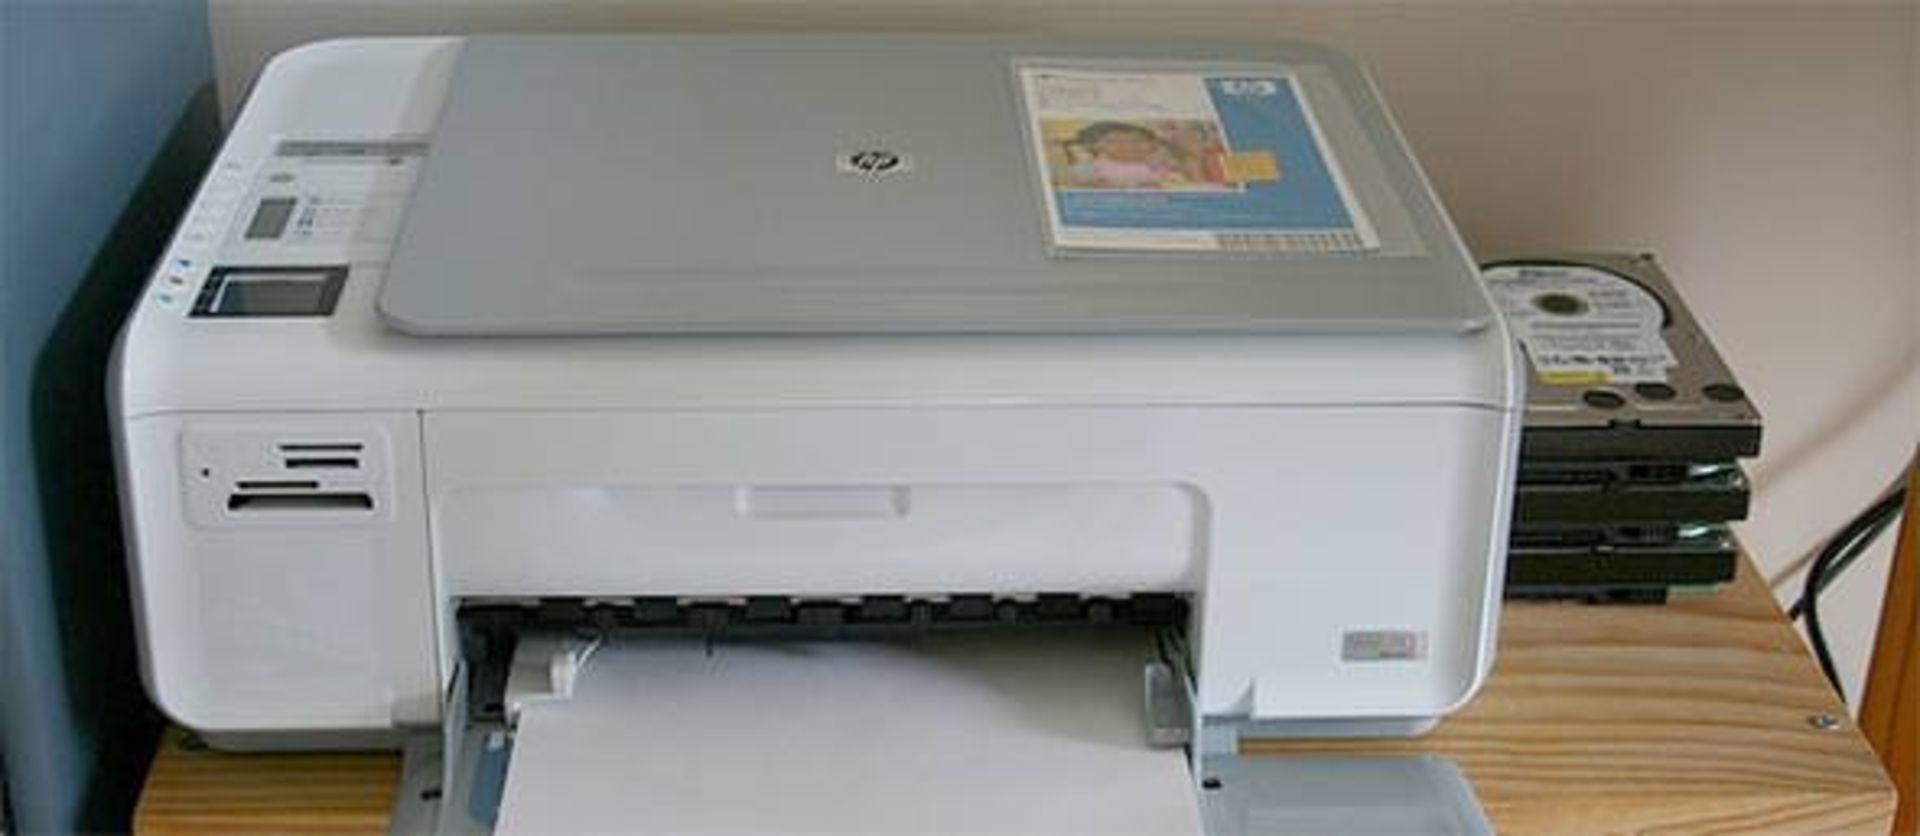 best-printer-for-budget-1